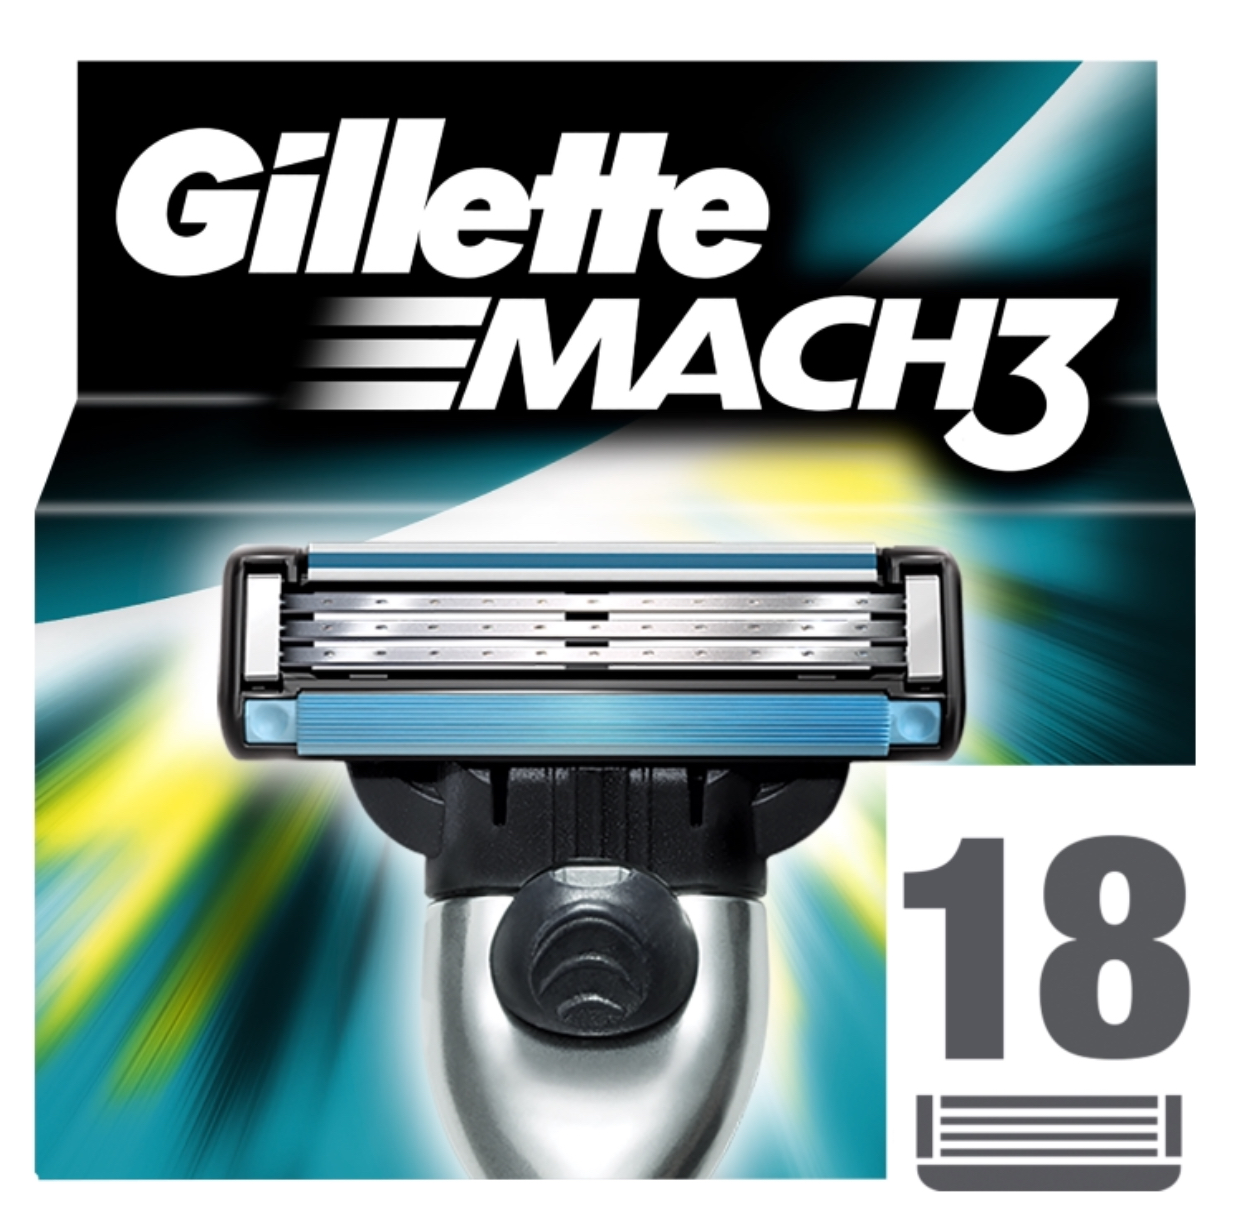 Gillette Mach3 Yedek Tıraş Bıçağı 18'li Karton Paket